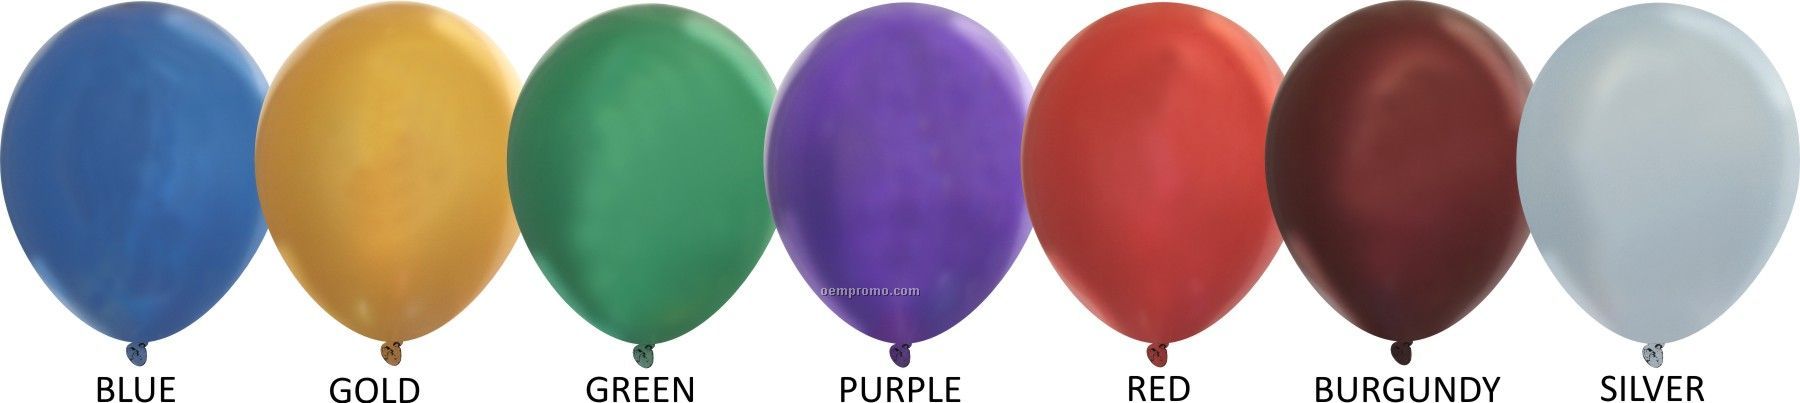 Unimprinted Metallic Latex Balloons (9")